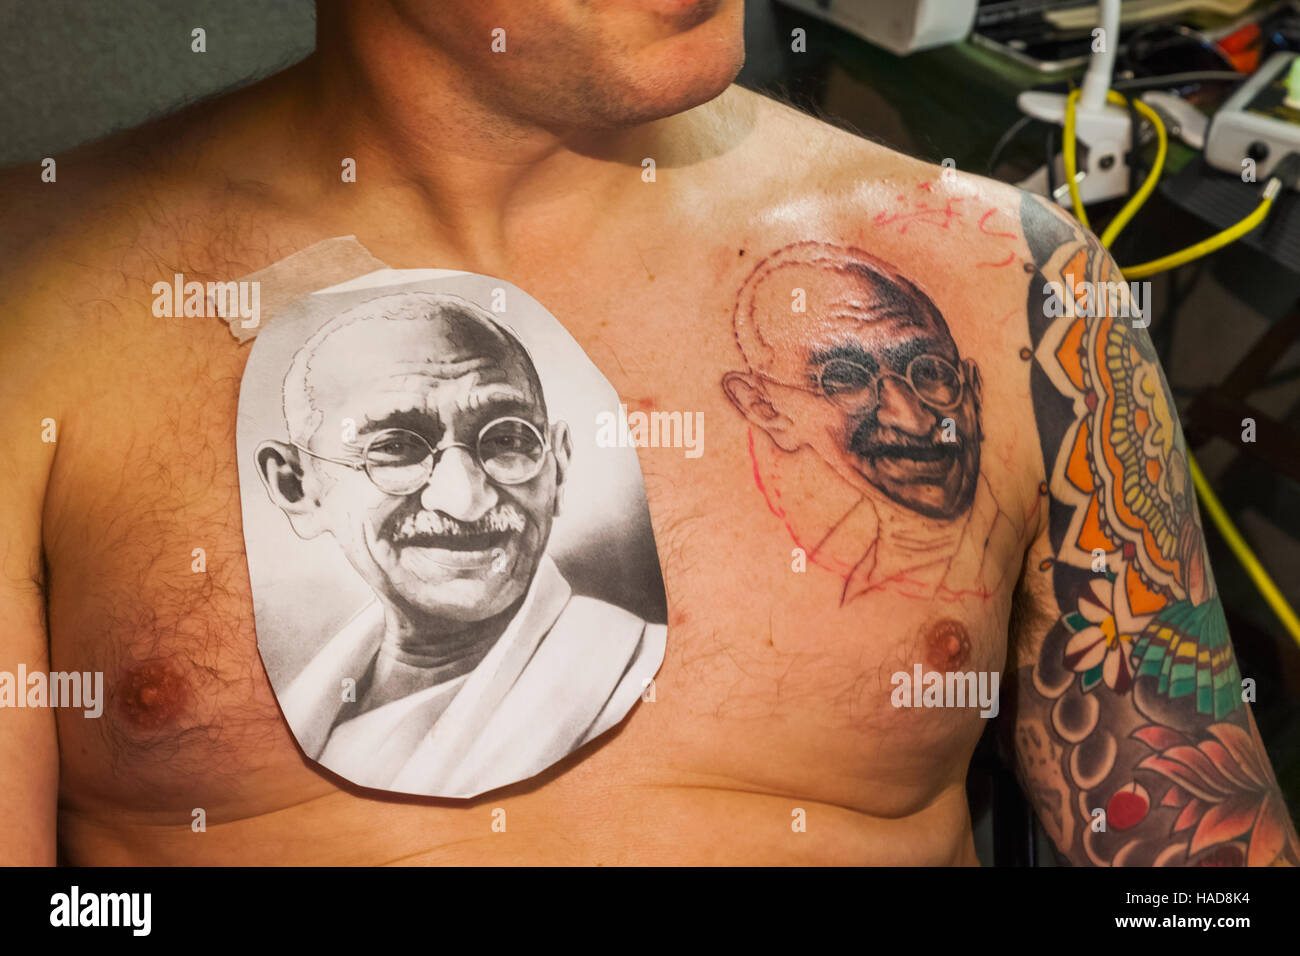 Inglaterra, Londres, Londres Tattoo Convention, hombre tatuado con imagen de Gandhi Foto de stock